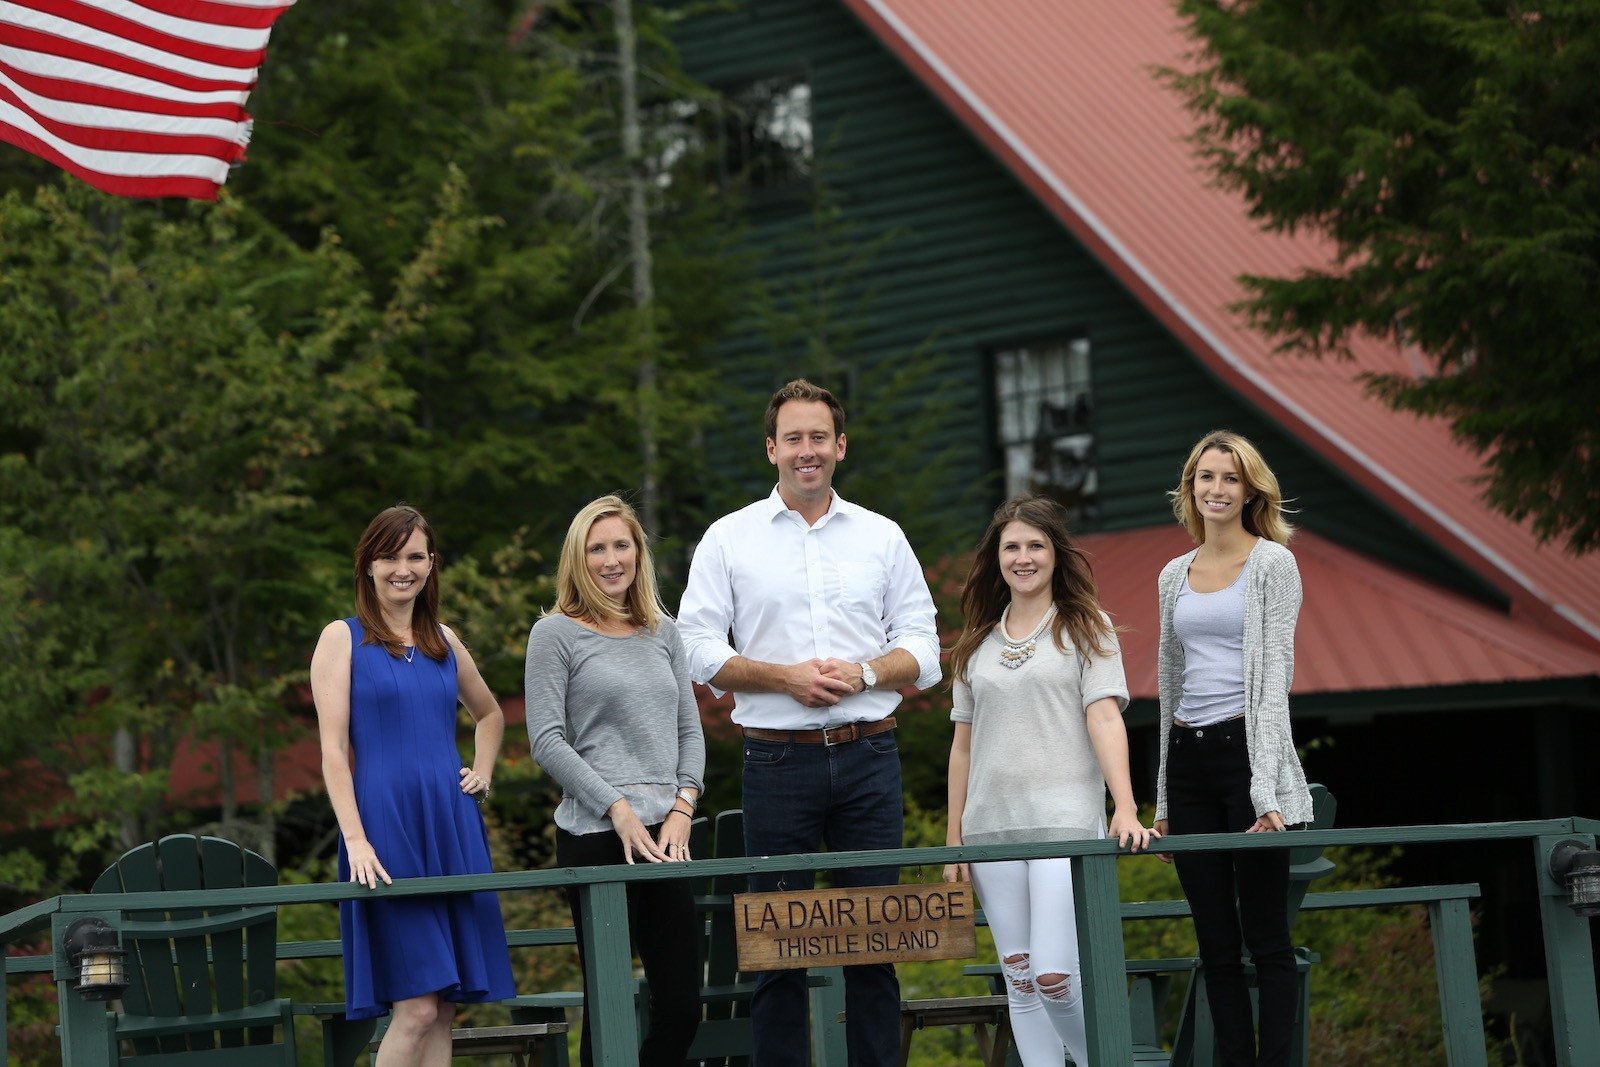 Adirondack Real Estate Team Continues to Lead - Pure Adirondacks